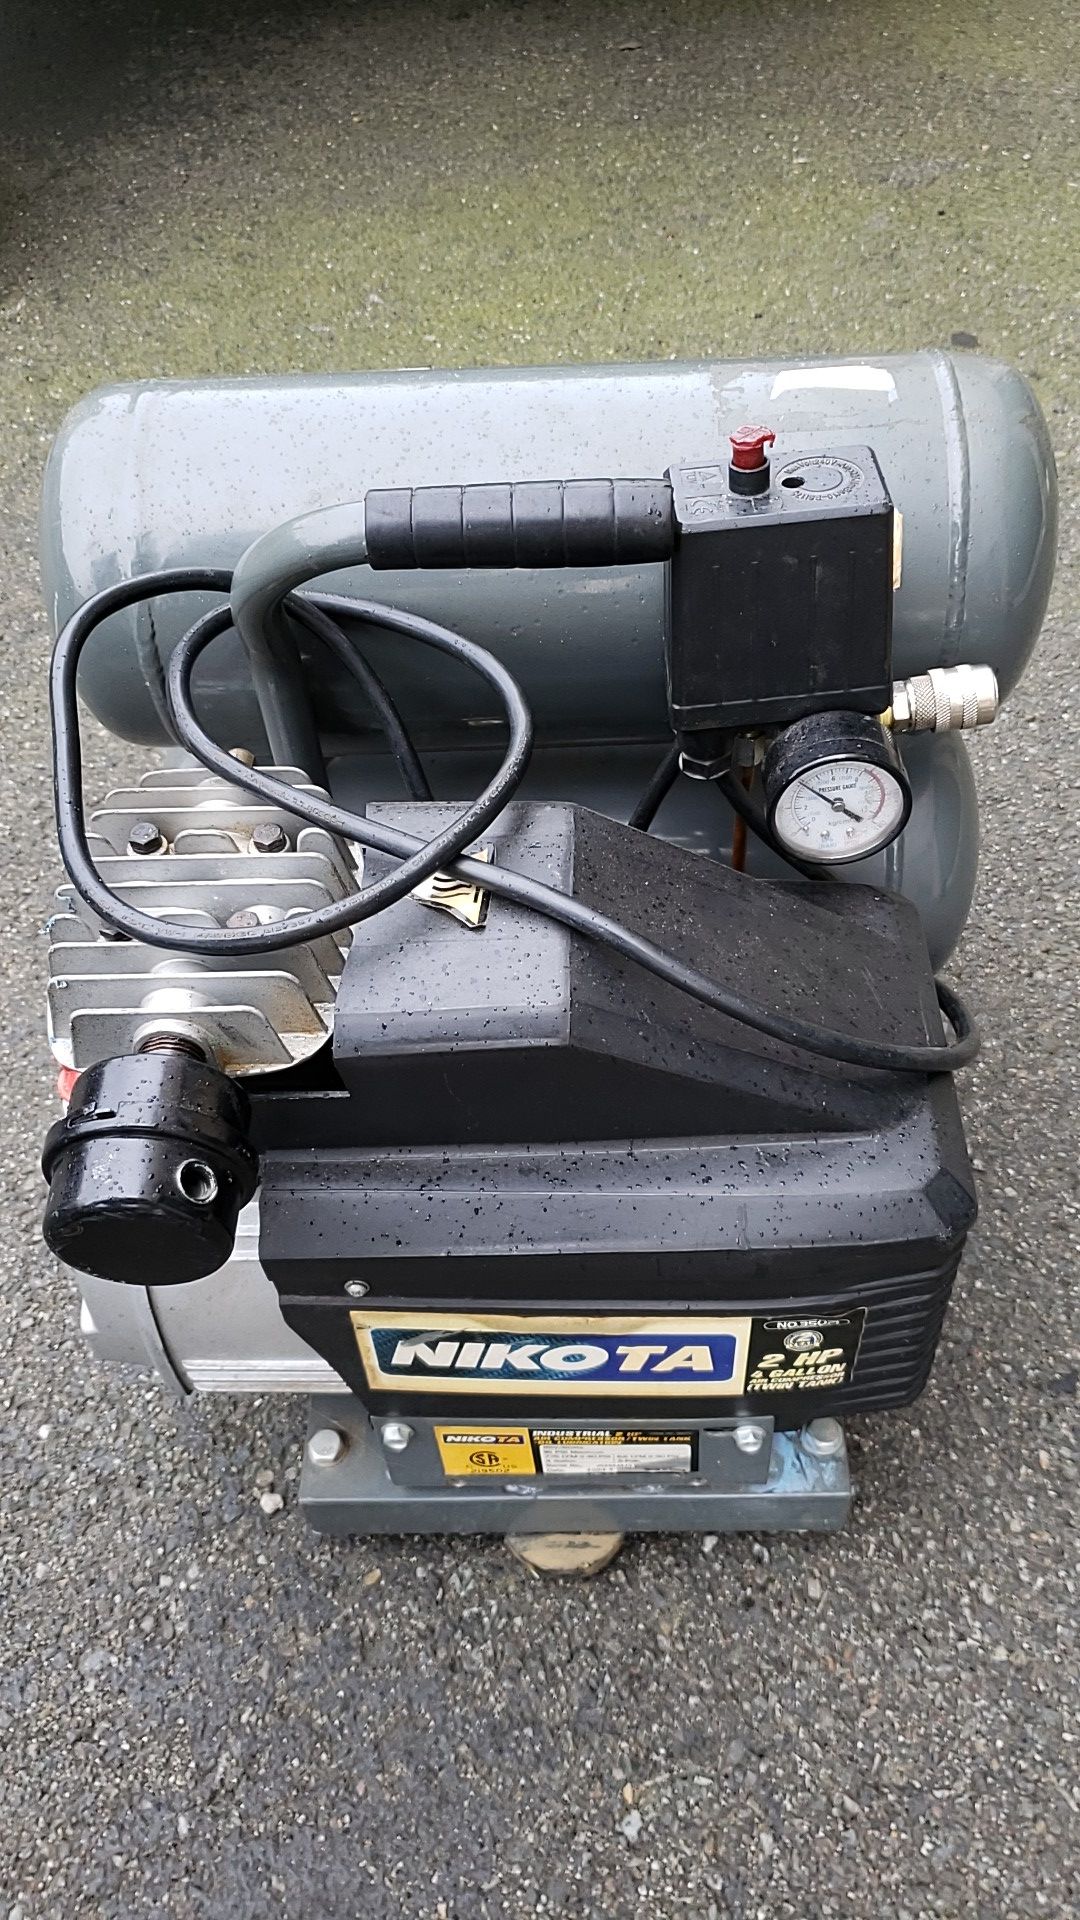 Nikita 2 hp 4 gallon air compressor $60